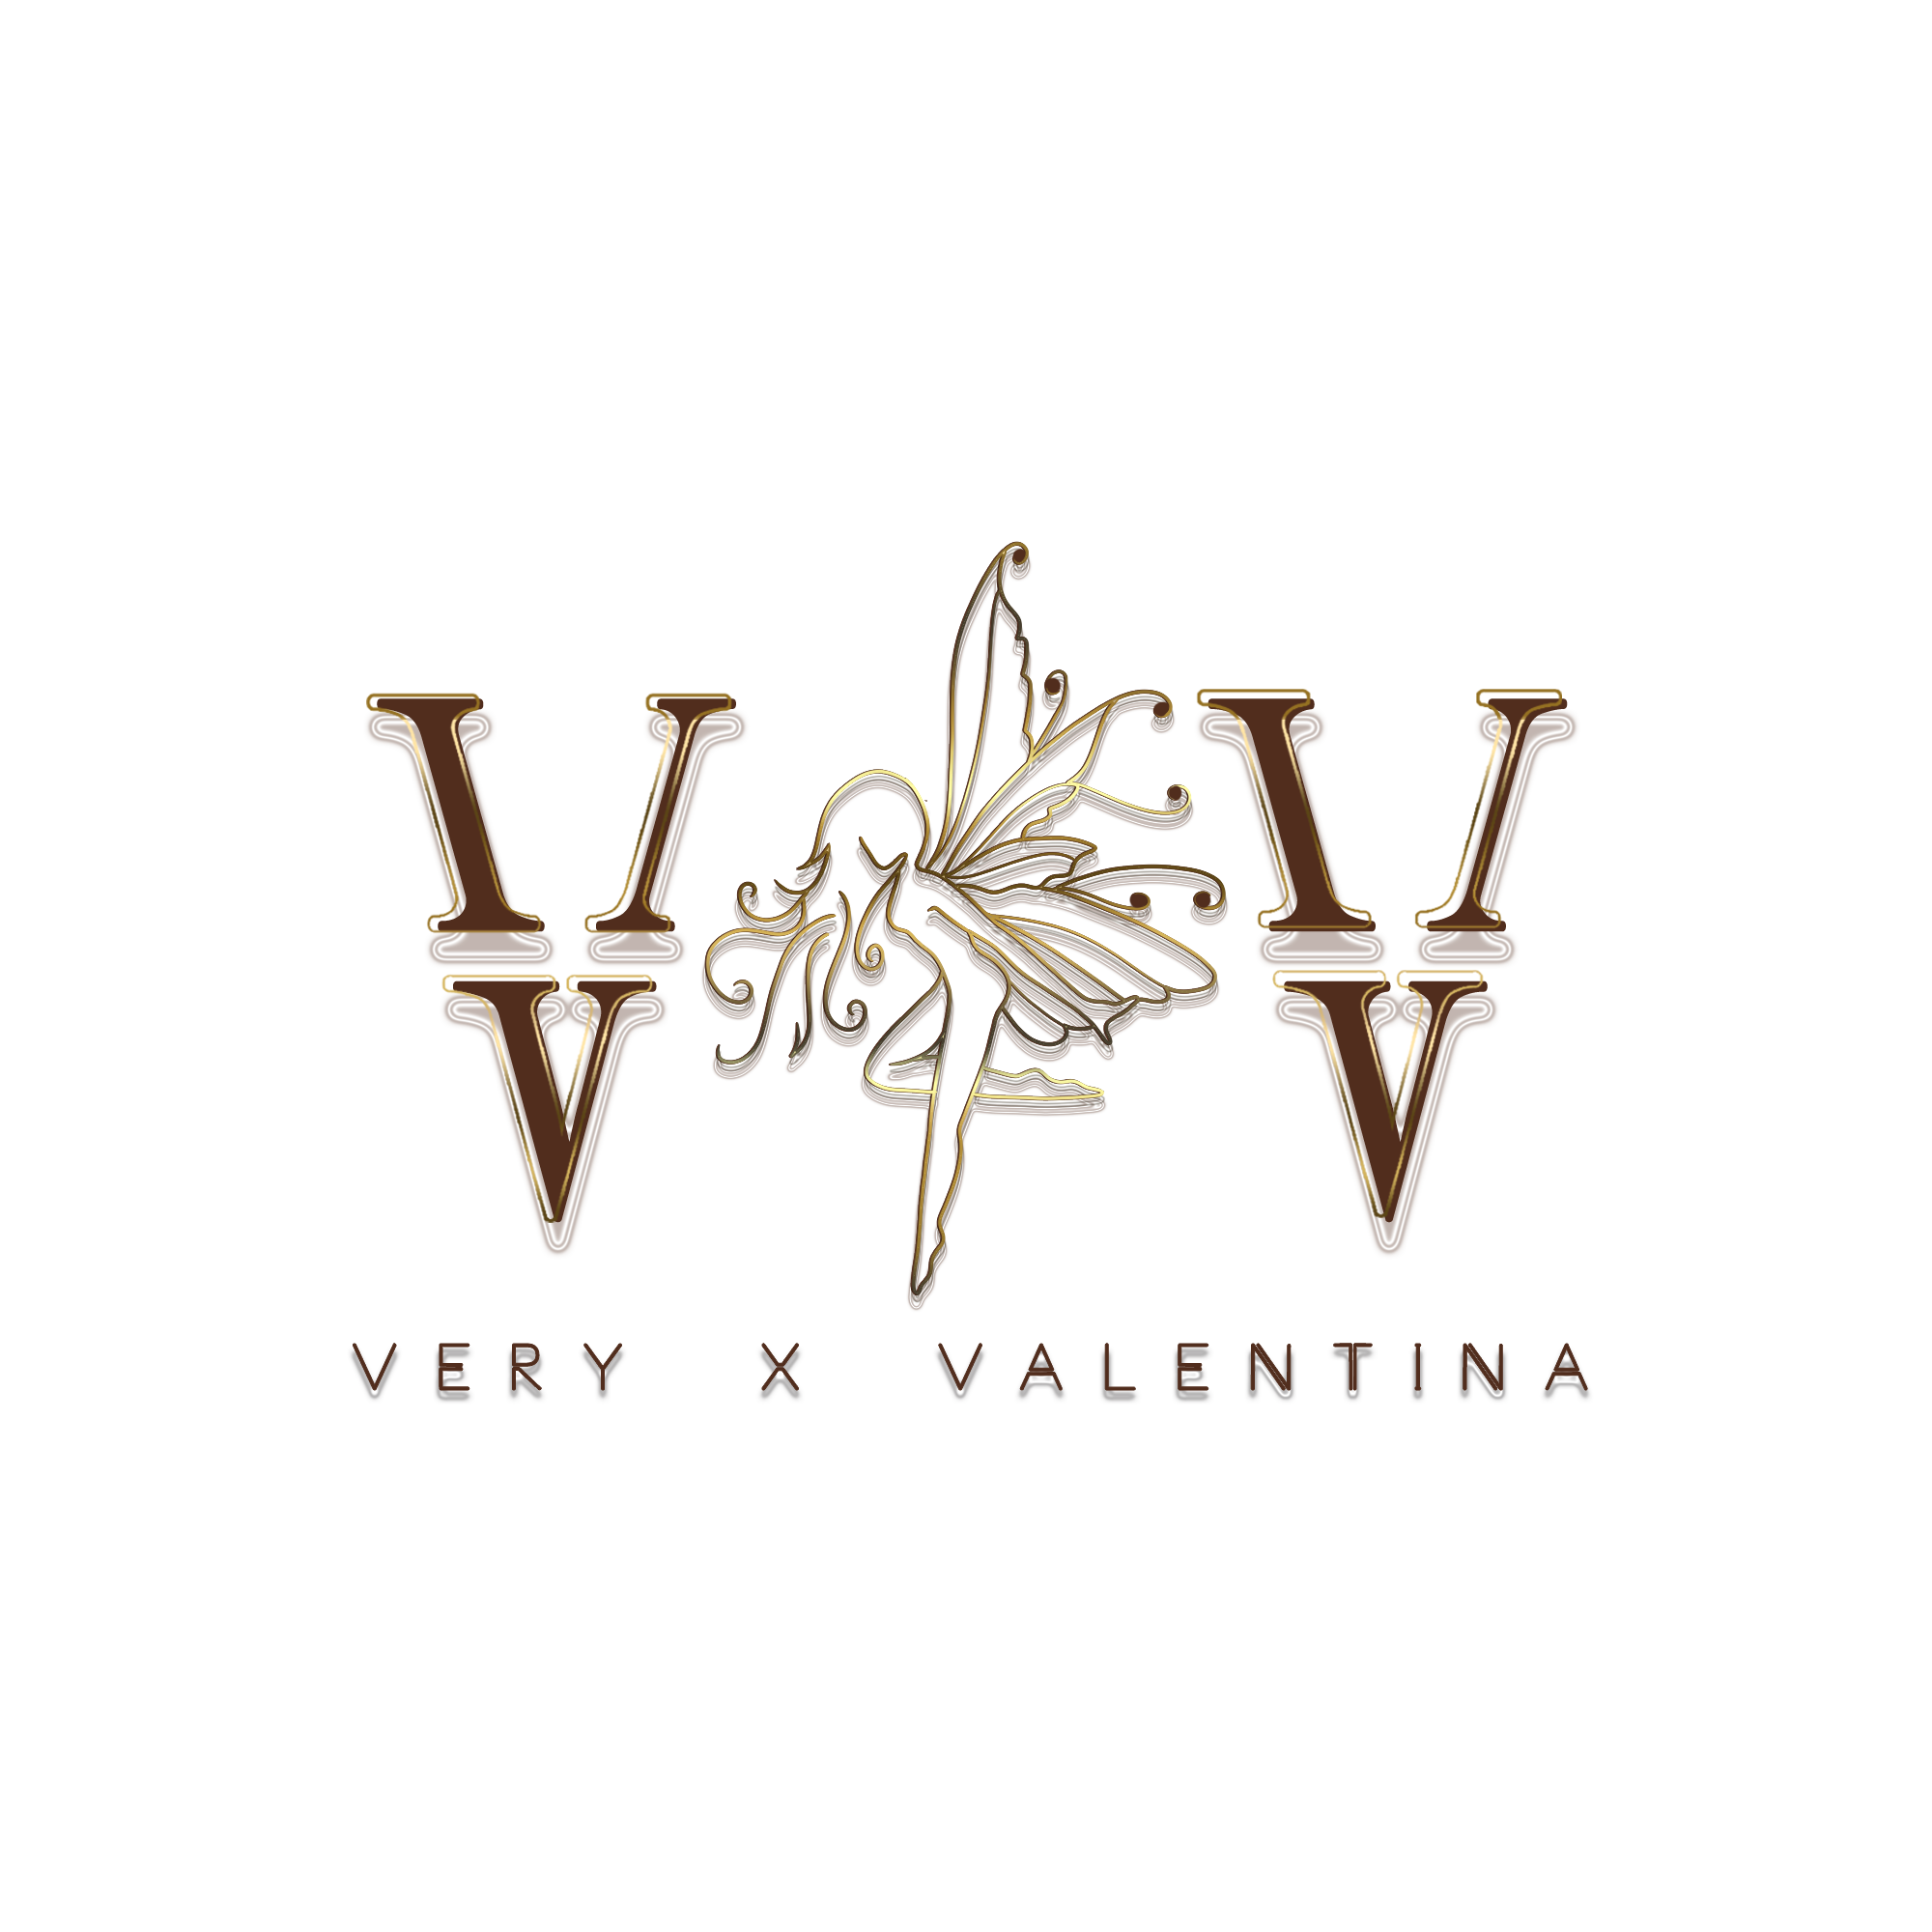 VERY X VALENTINA LLC